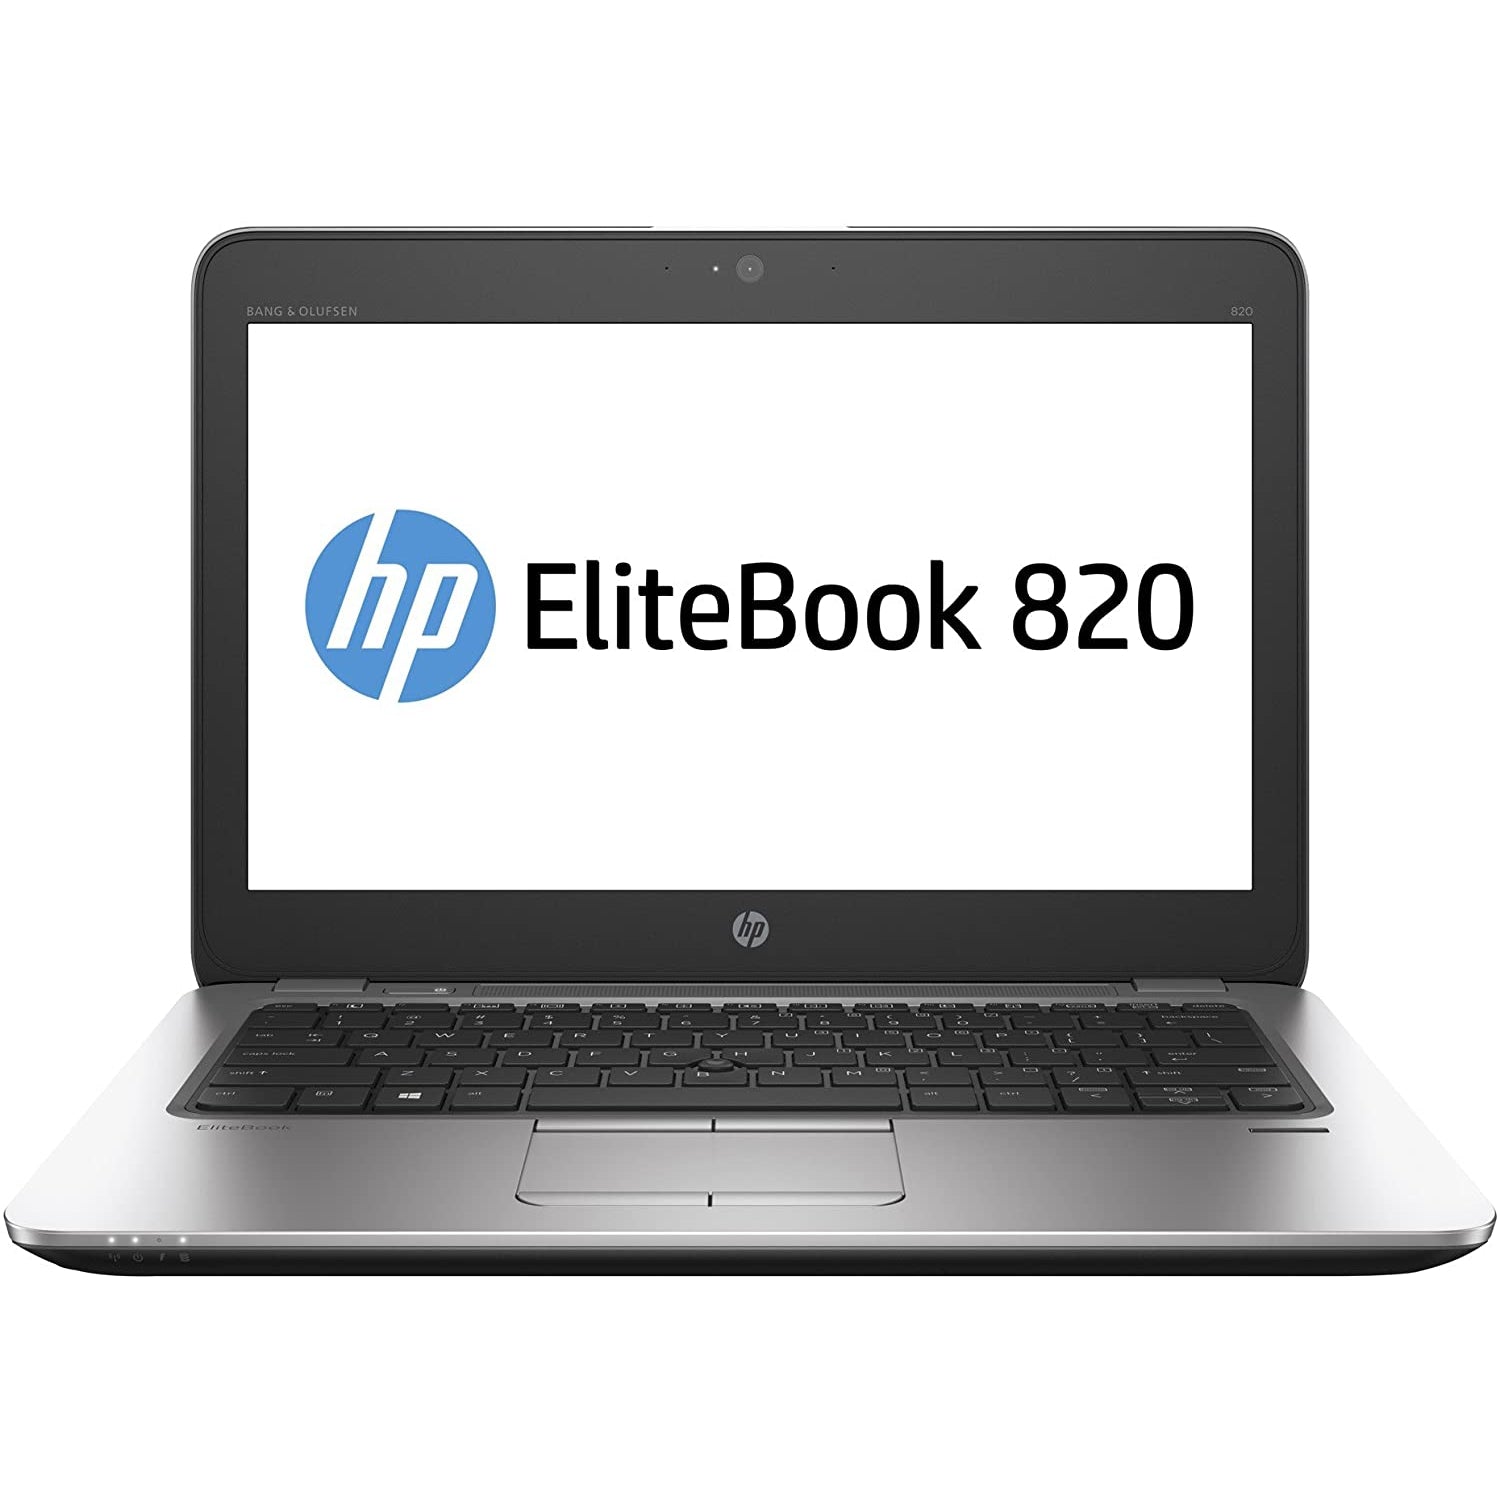 HP EliteBook 820 G3 12.5 inch Notebook PC, Intel Core i5 6200U, 8GB Ram, 128GB SSD - Silver